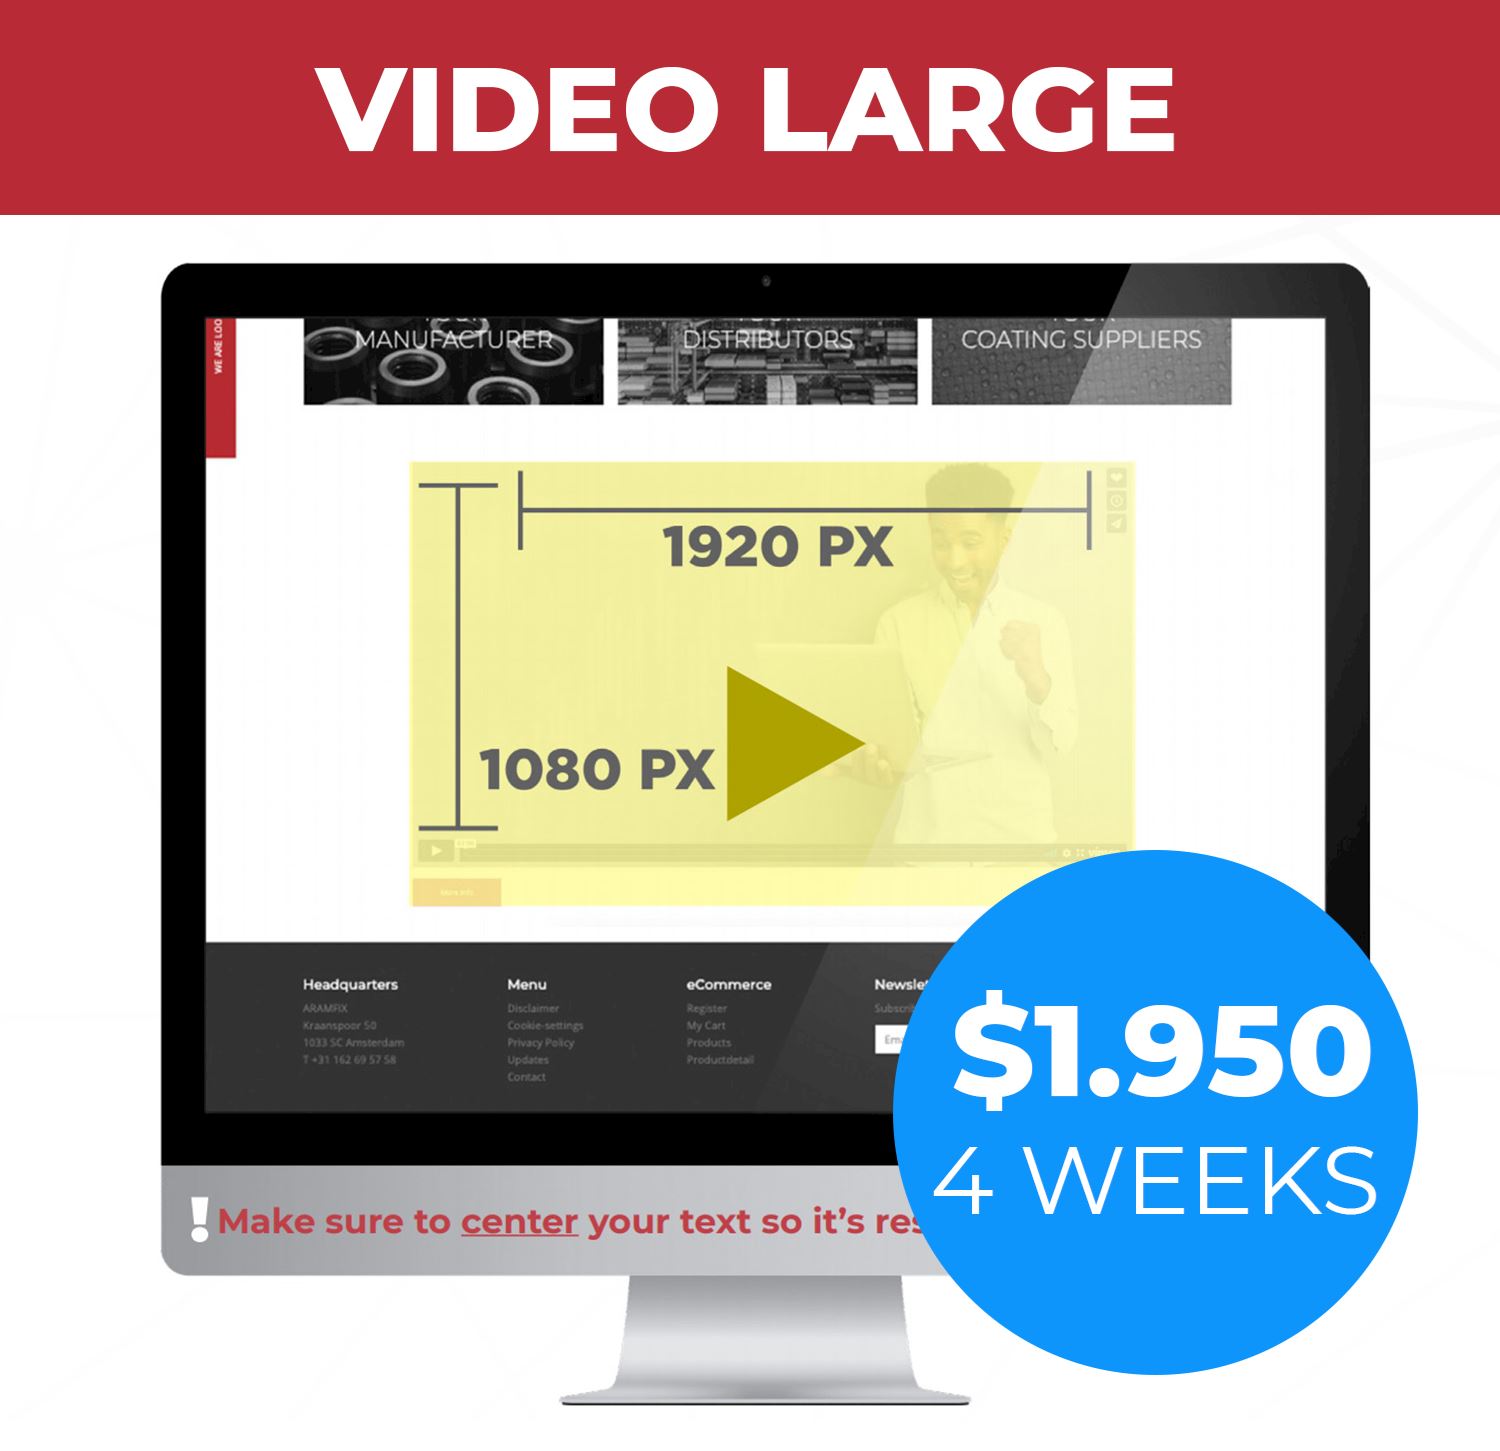 ads-large-video